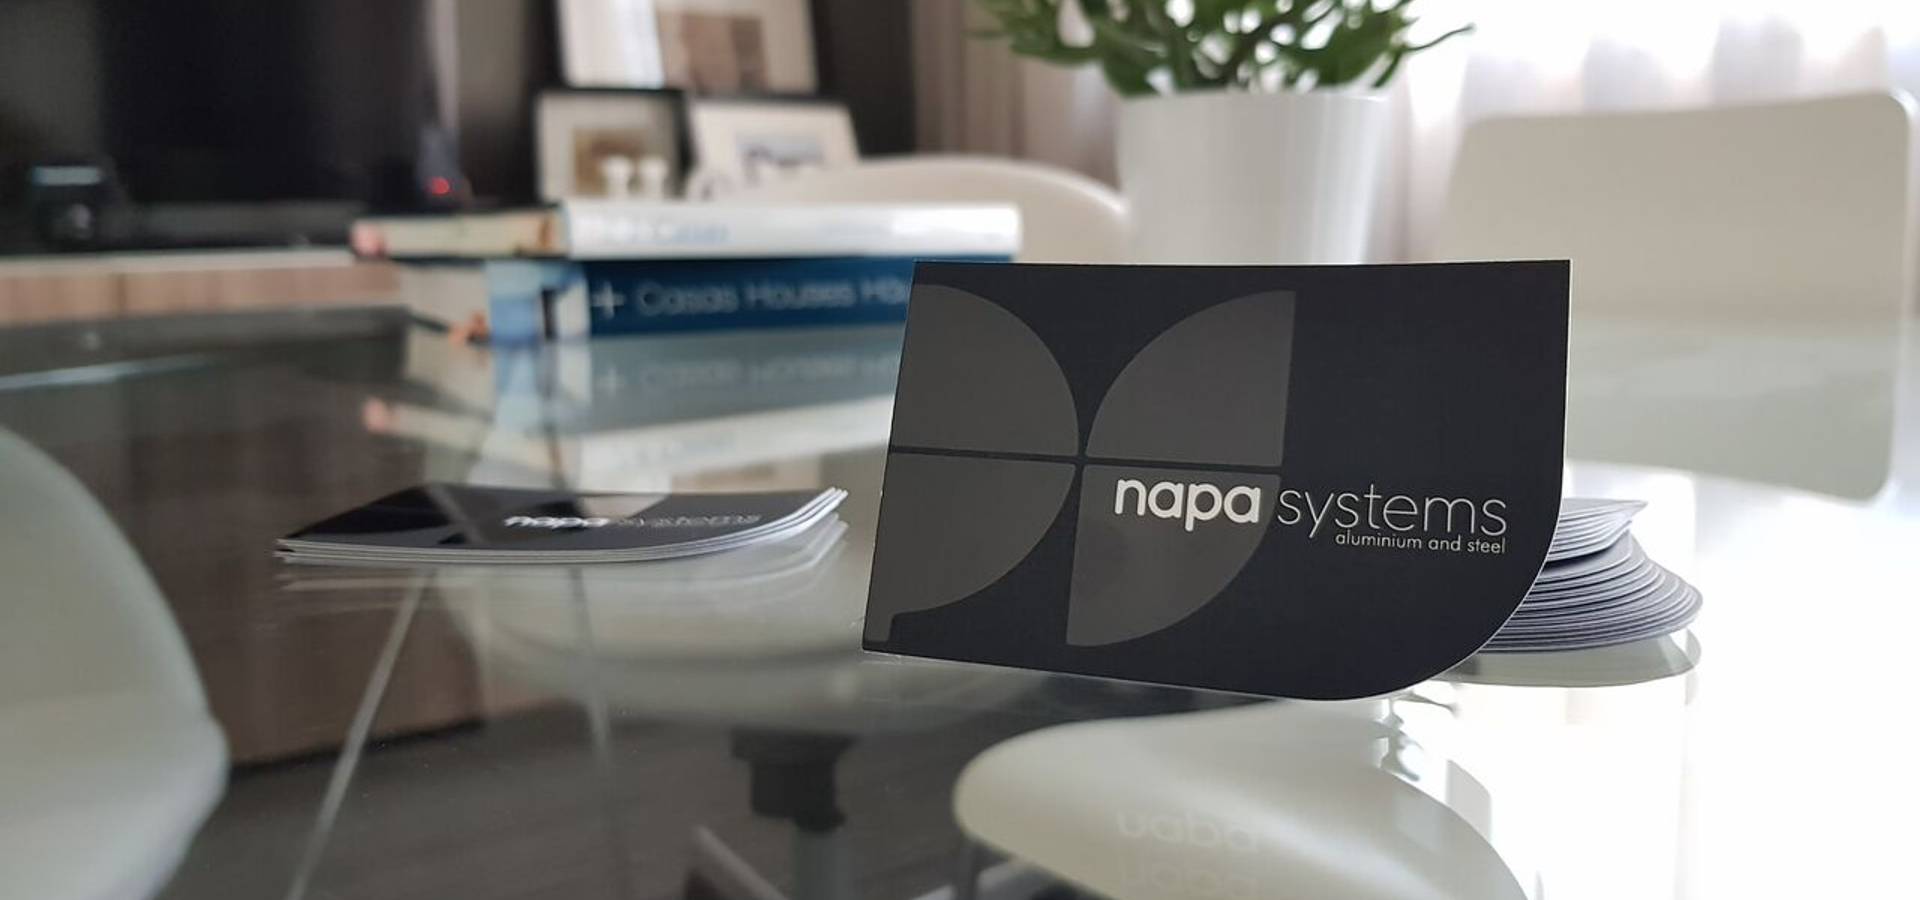 Napa Systems, Lda